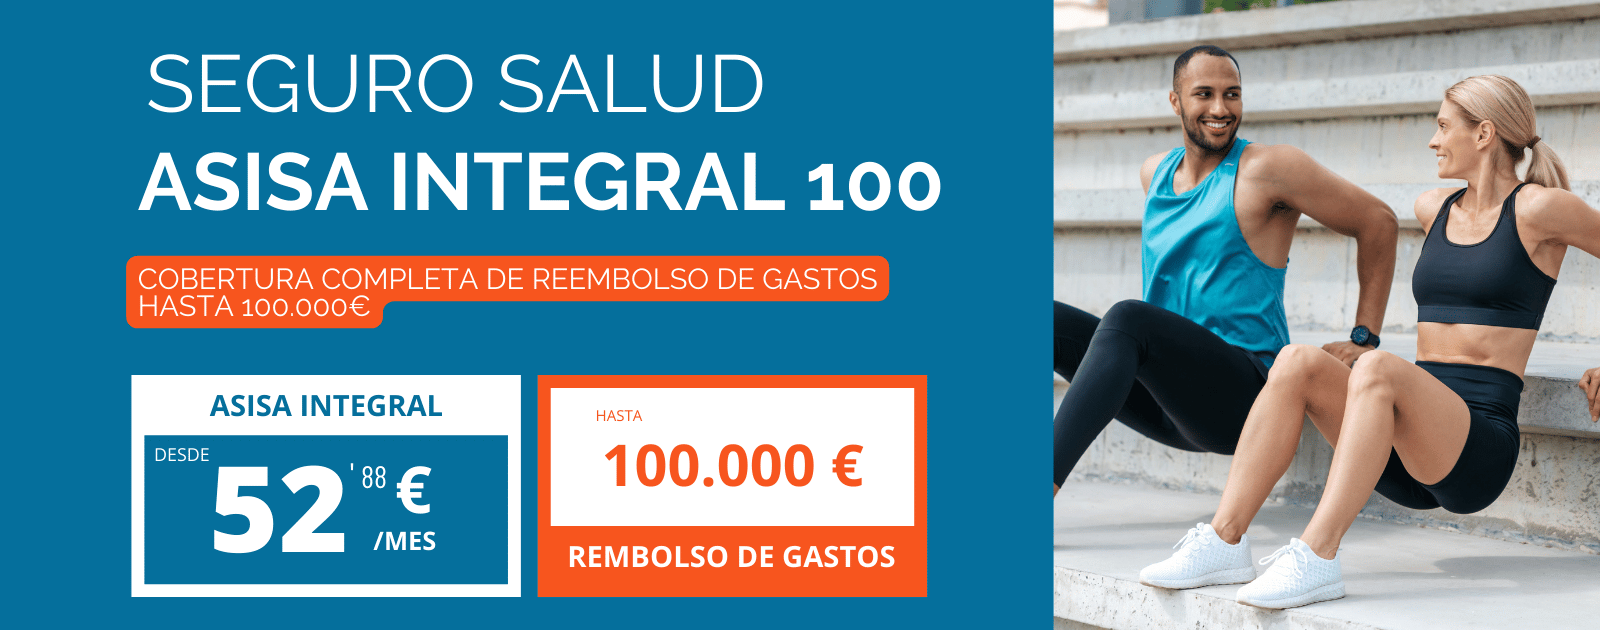 SEGURO SALUD ASISA INTEGRAL REMBOLSO 100.000€